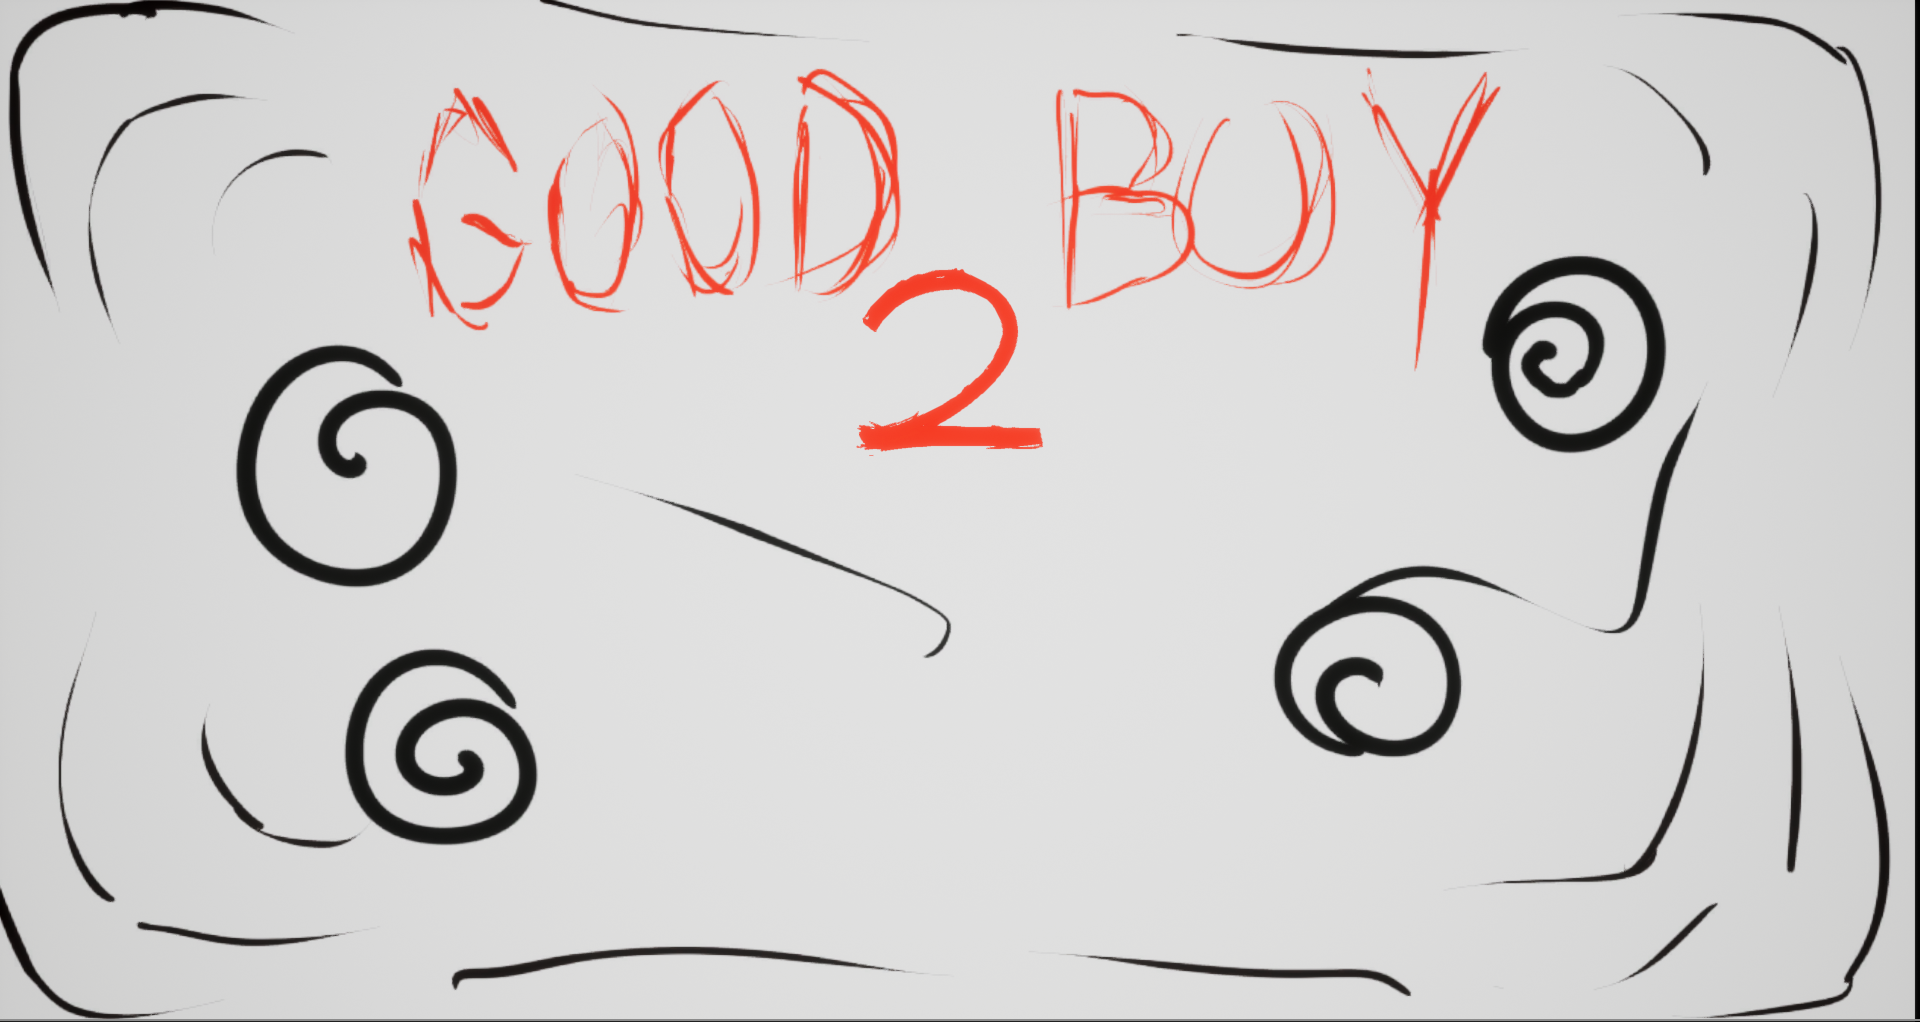 Good Boy 2